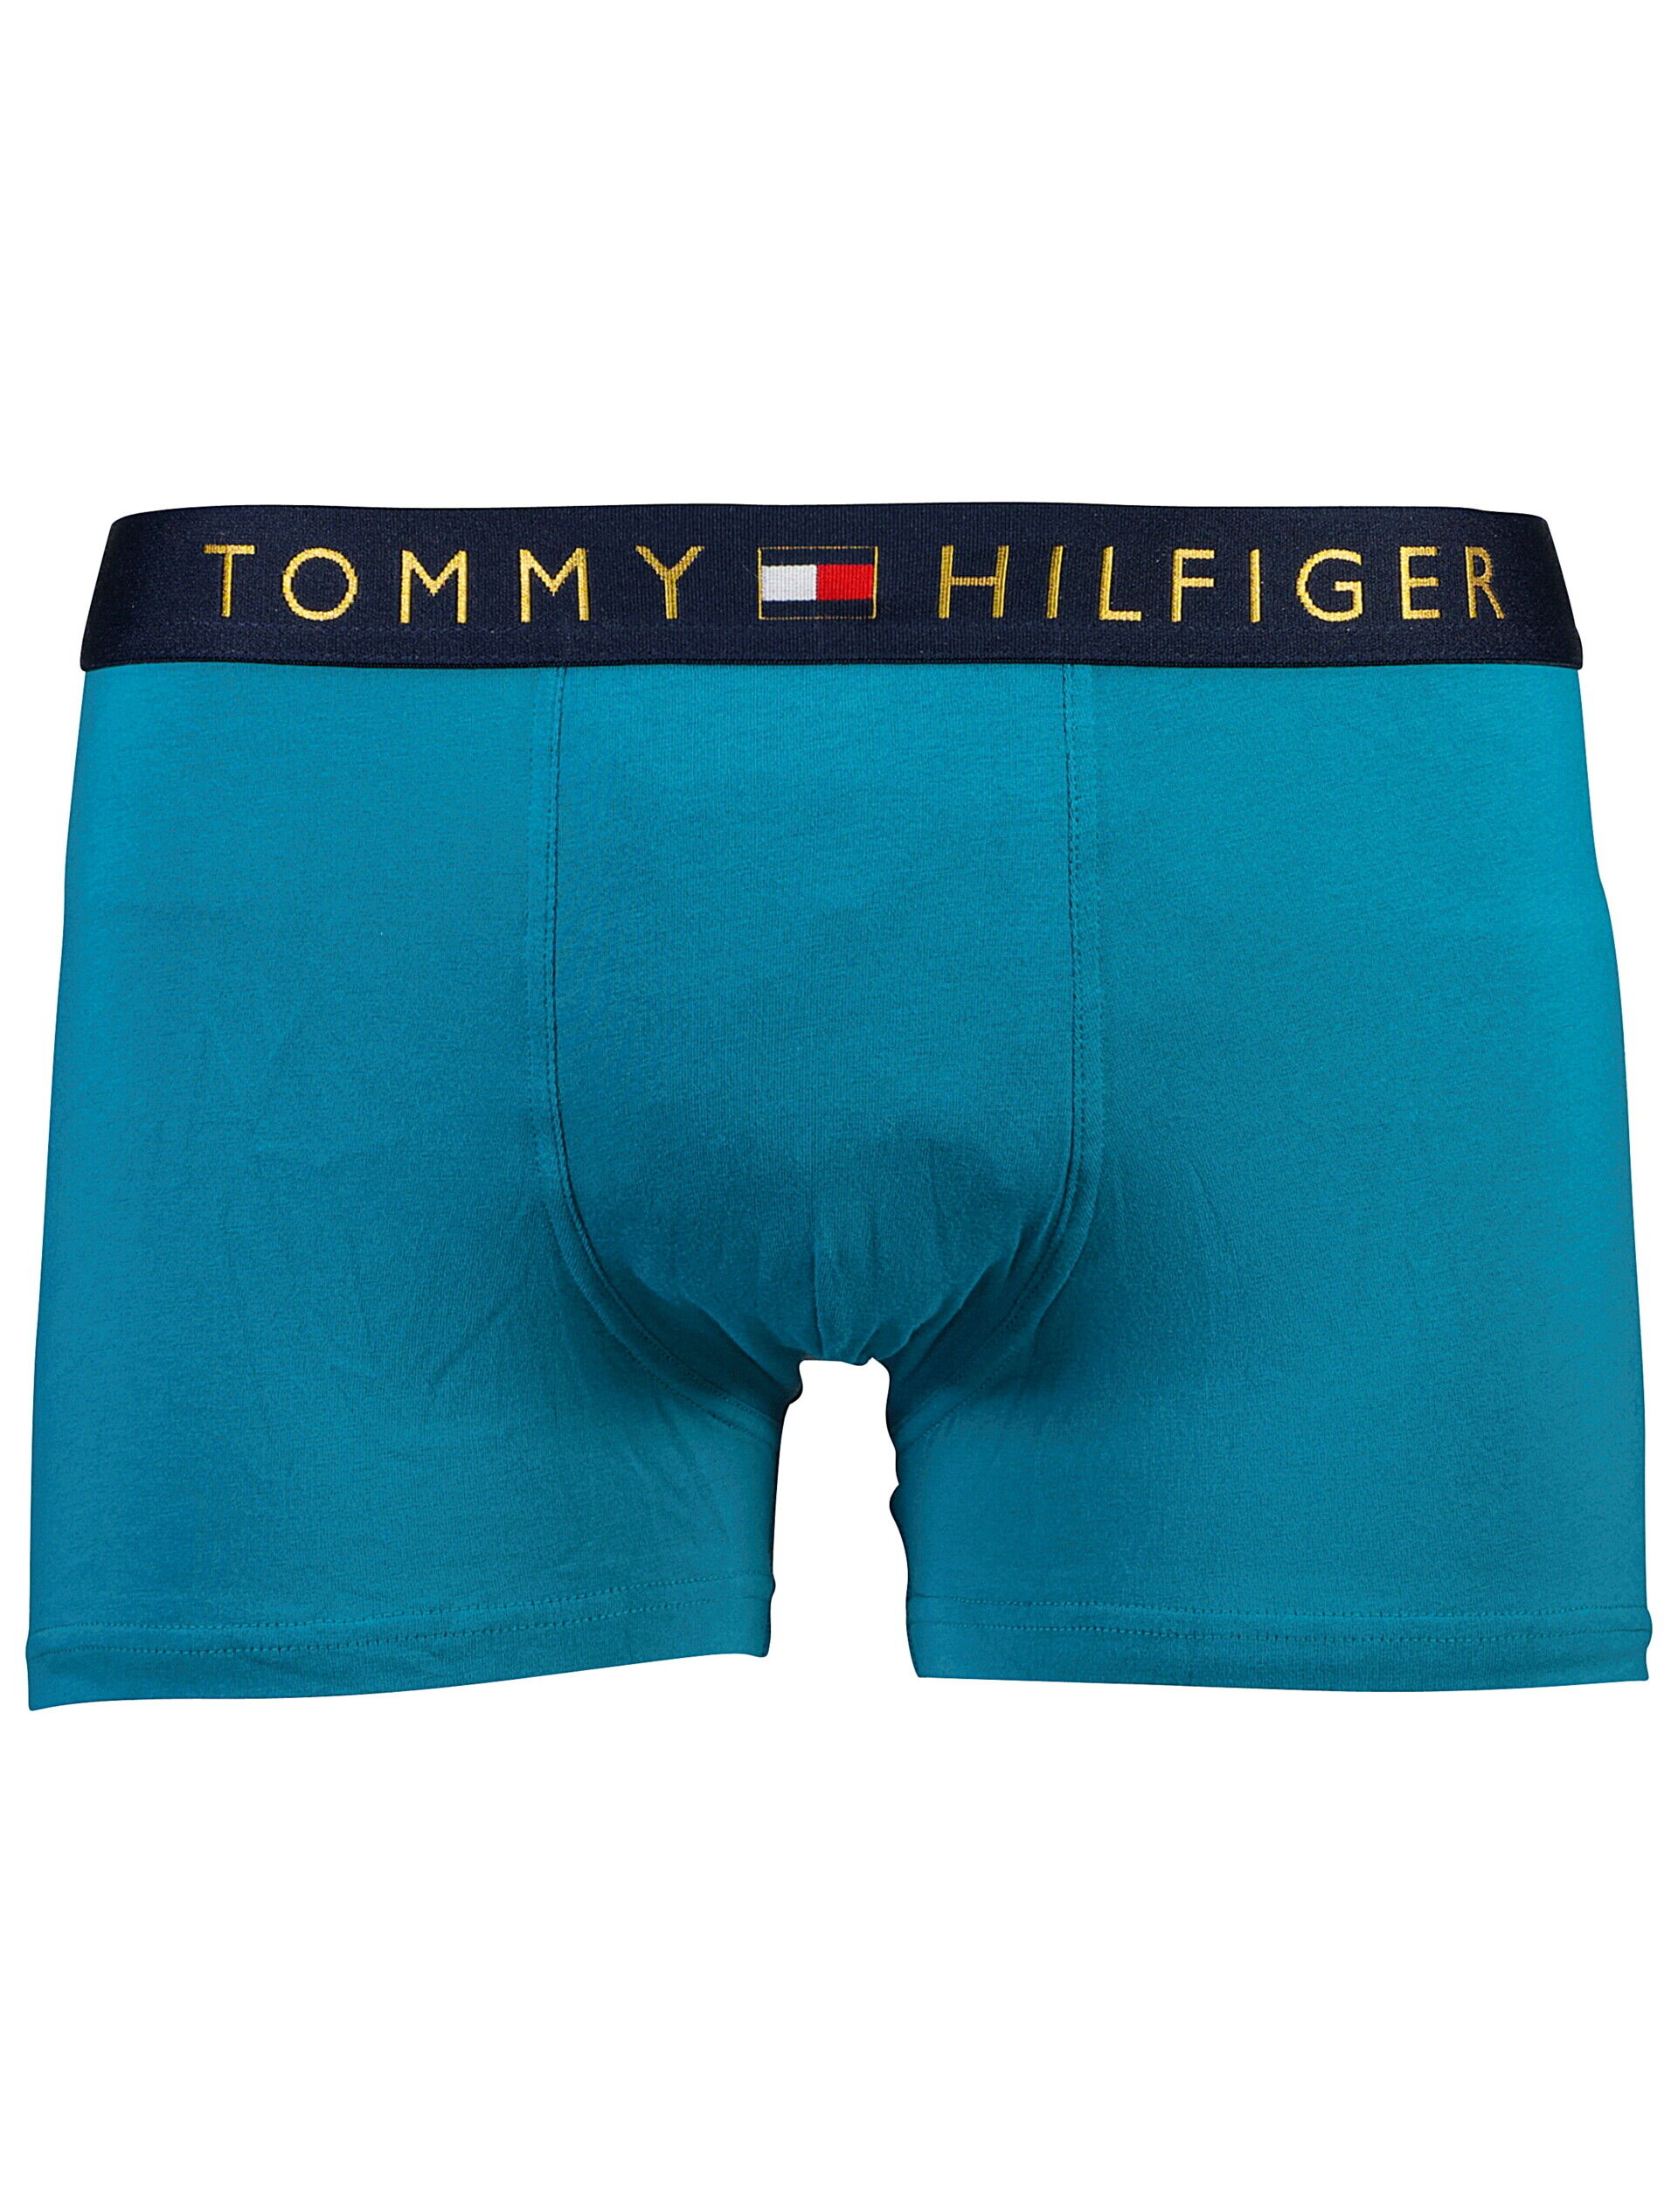 Tommy Hilfiger  Tights 90-900795